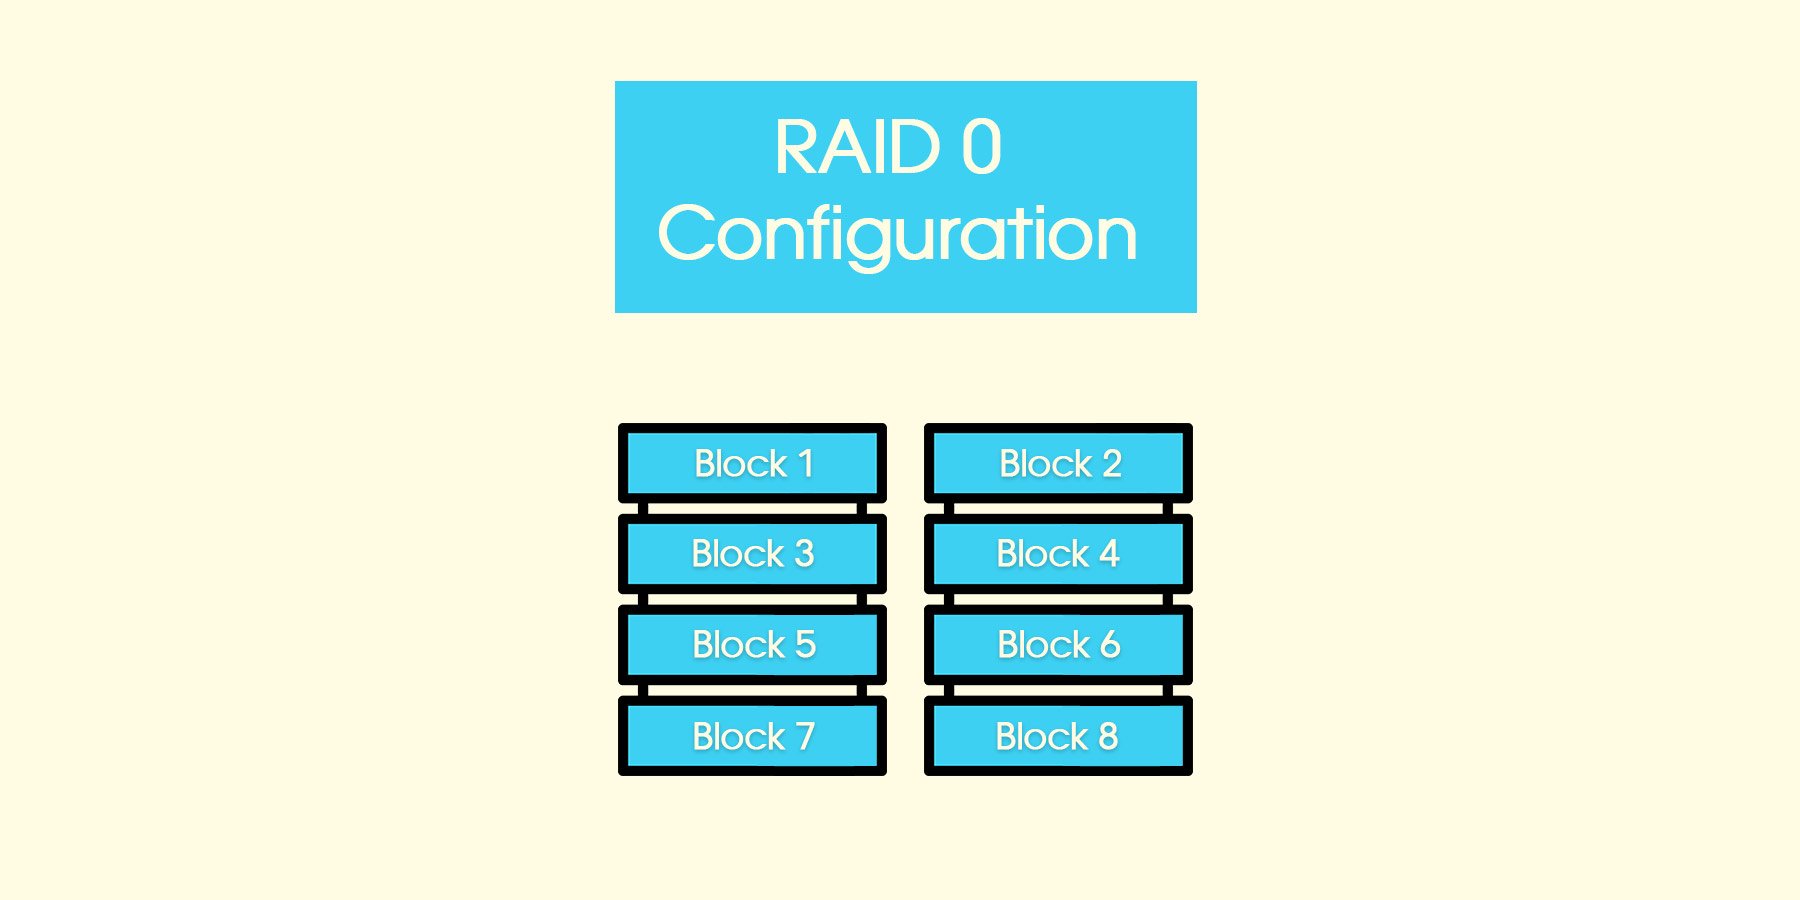 RAID 0 Configuration